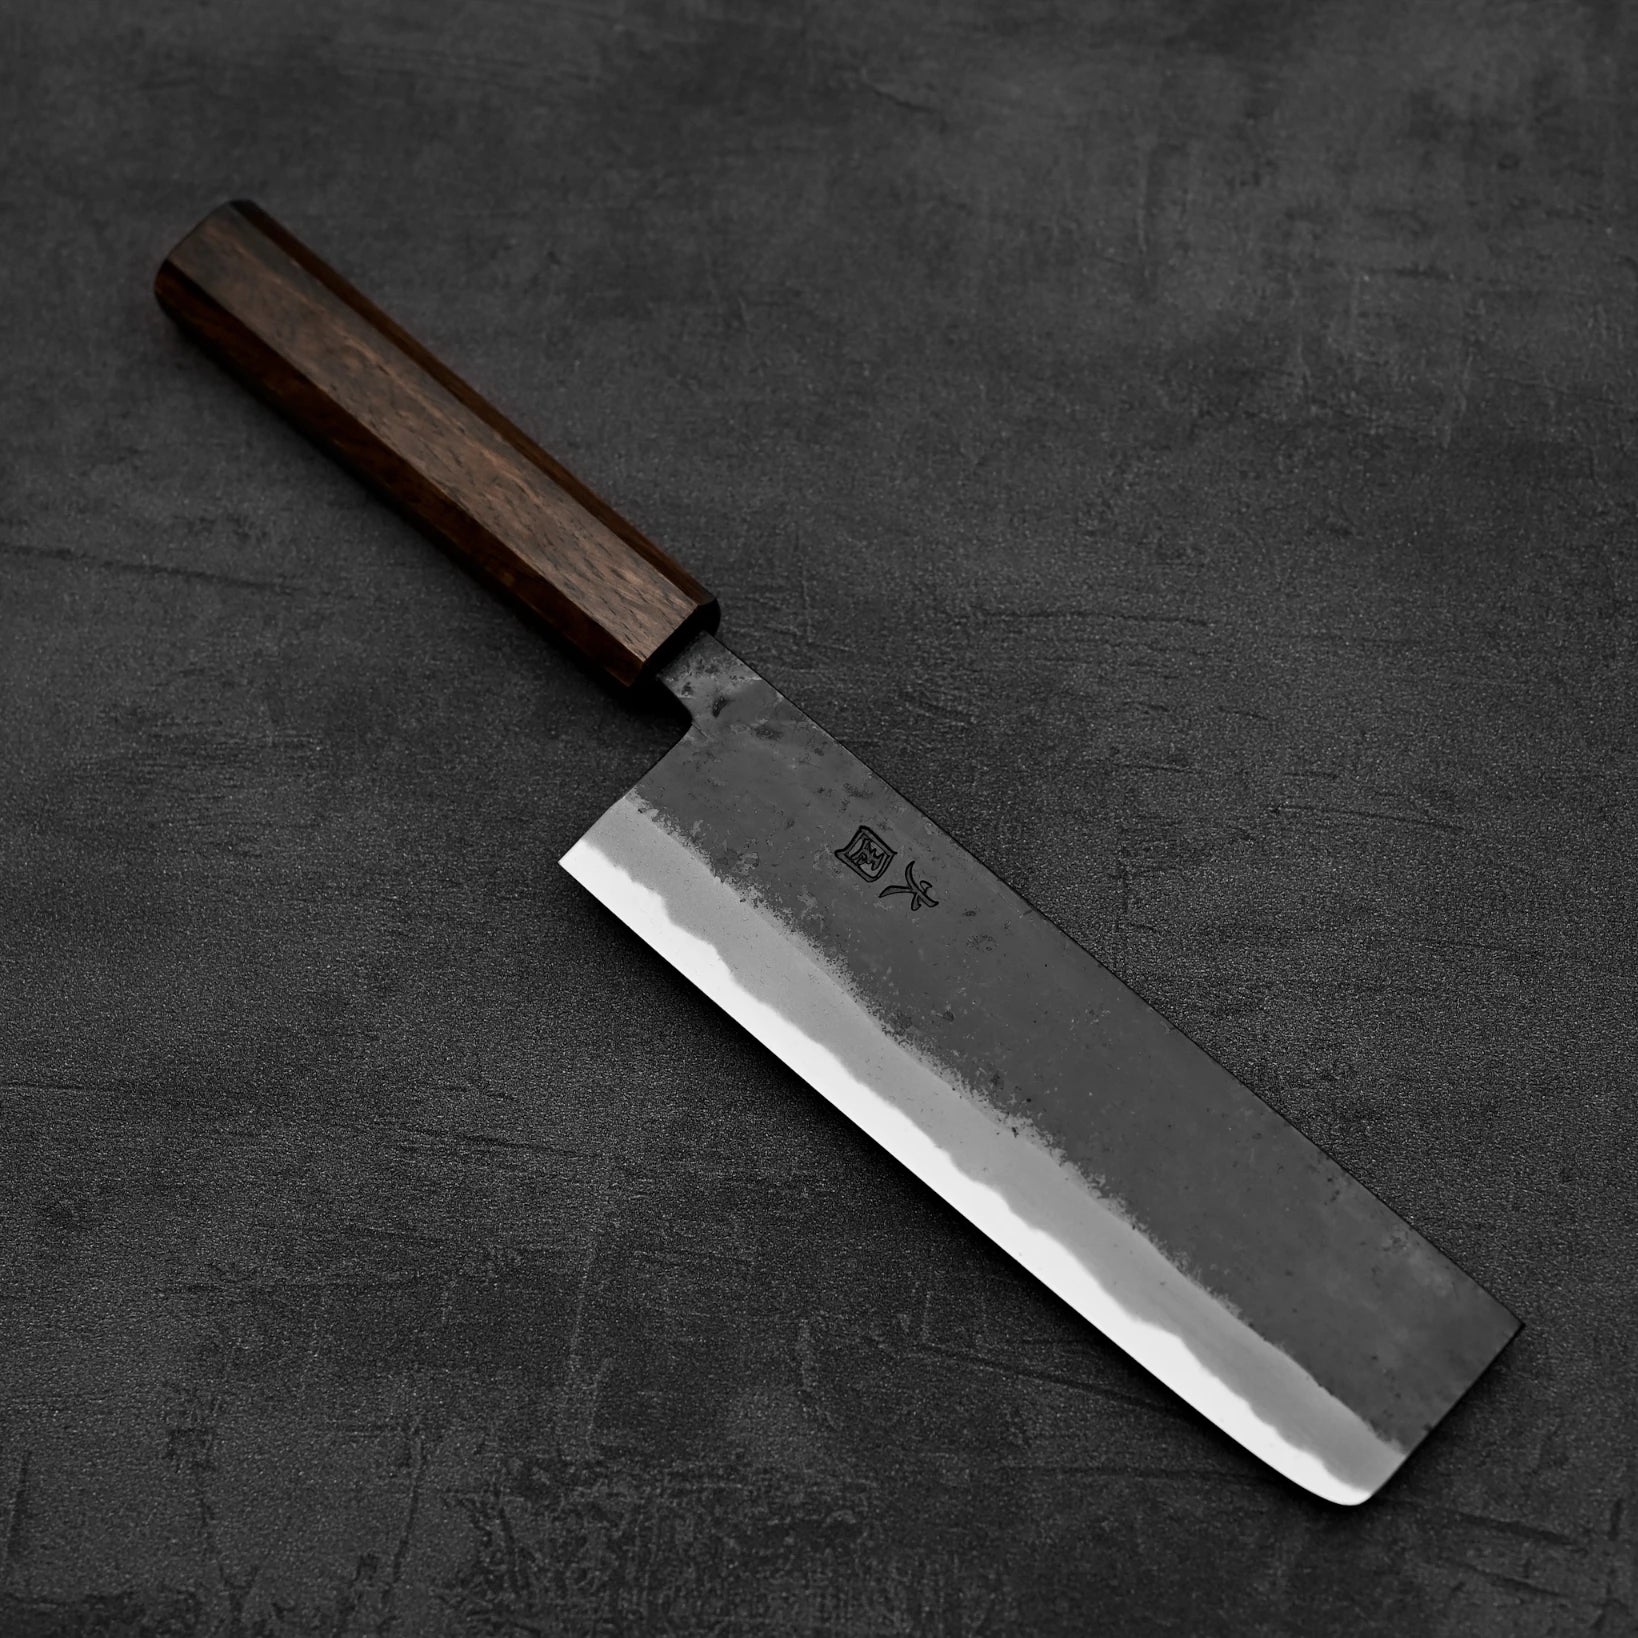 Another top down view of Hinokuni kurouchi shirogami#1 nakiri knife in diagonal position